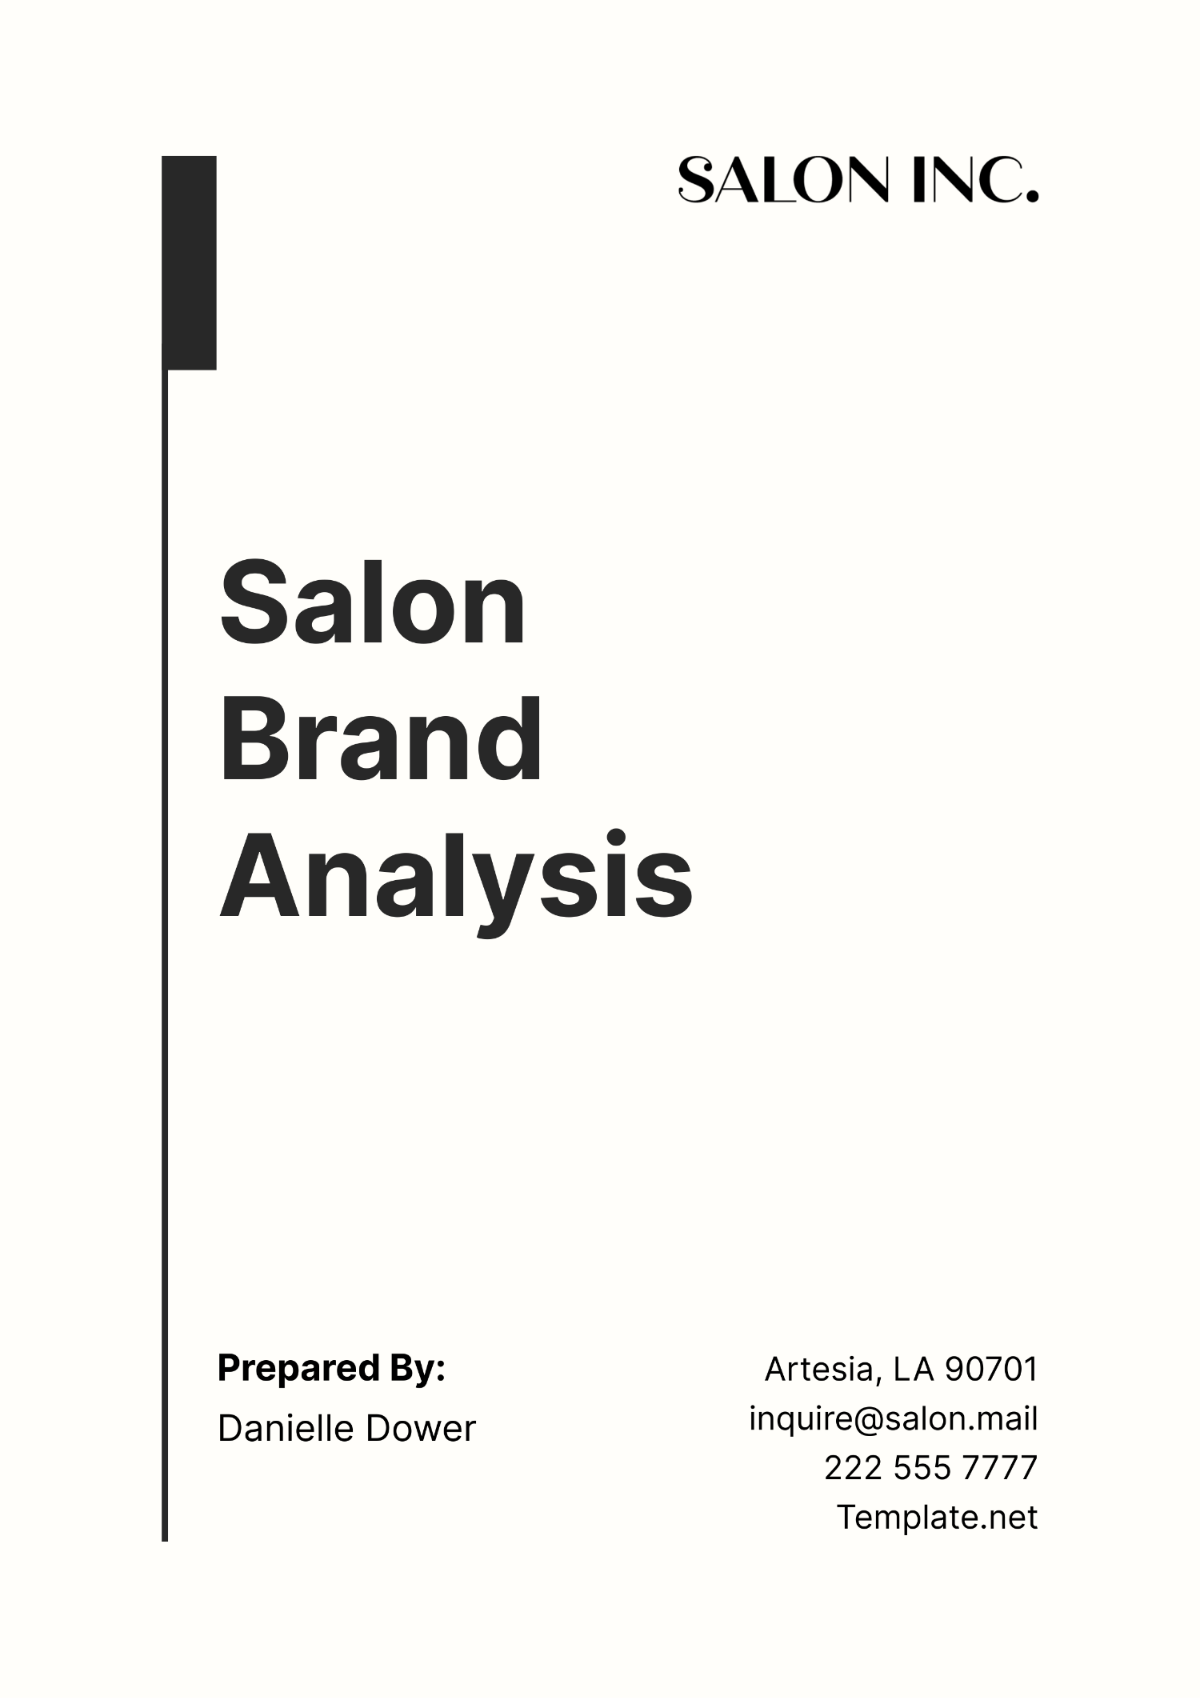 Salon Brand Analysis Template